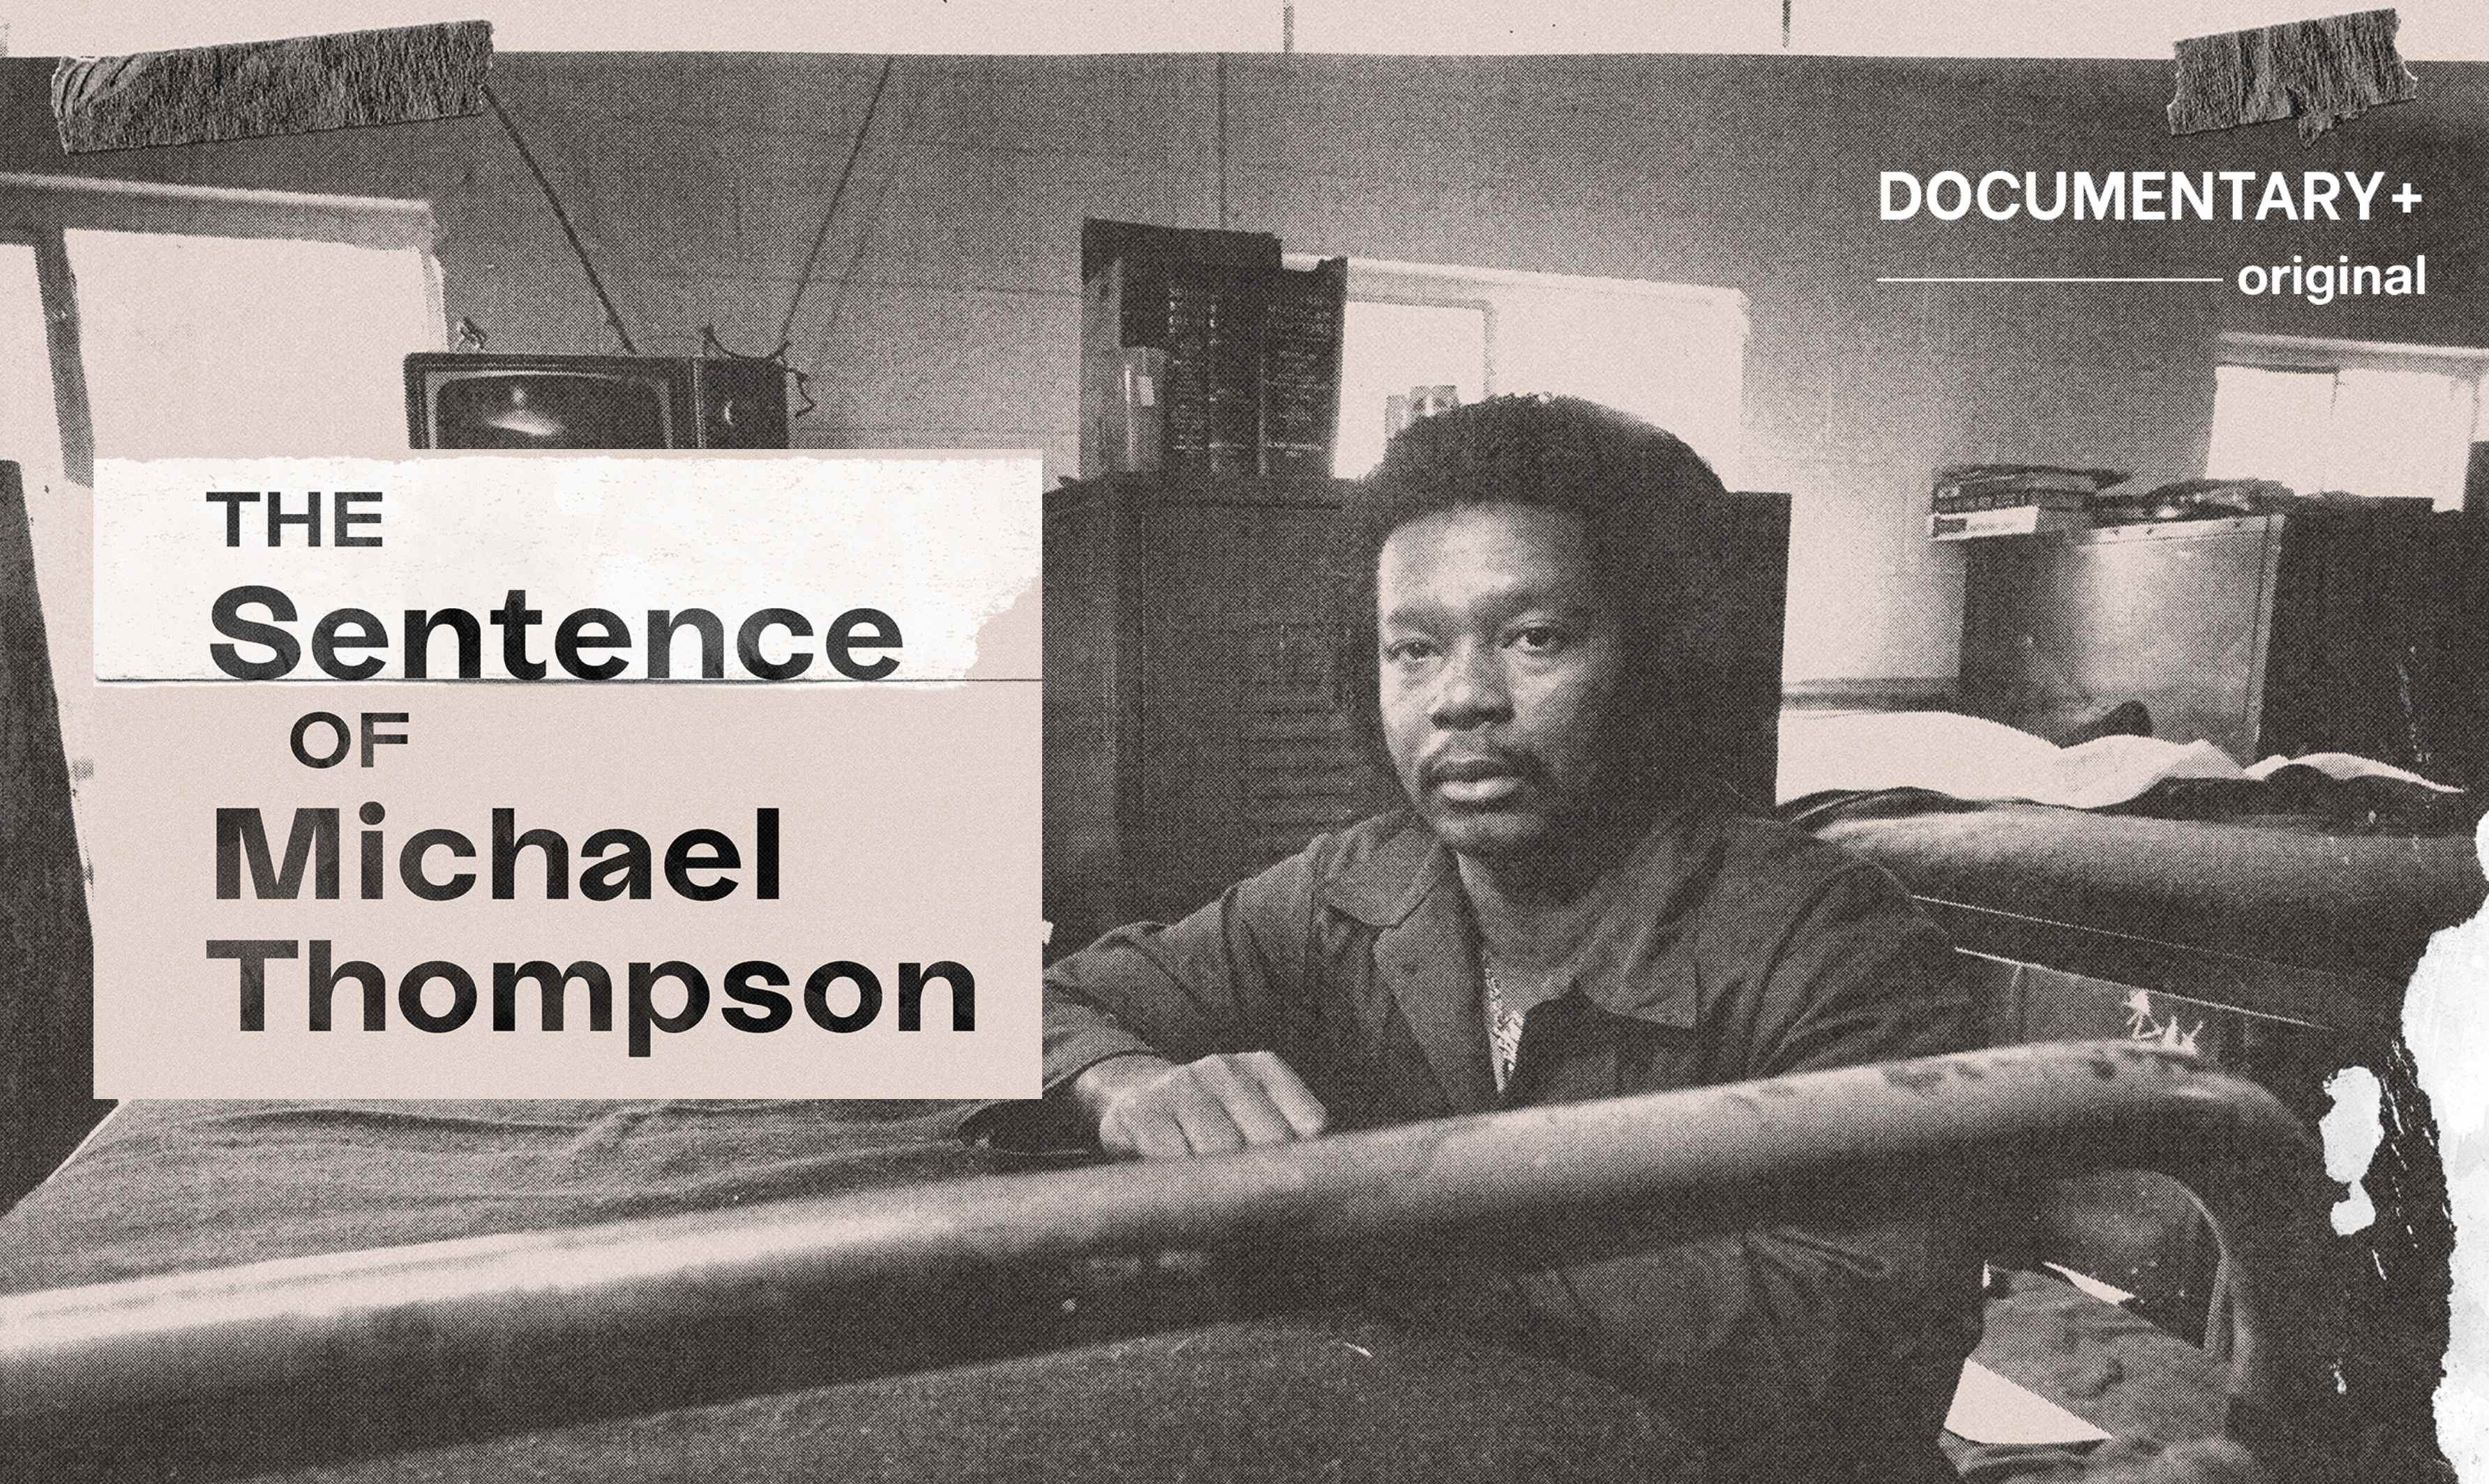 The sentence of Michael Thompson